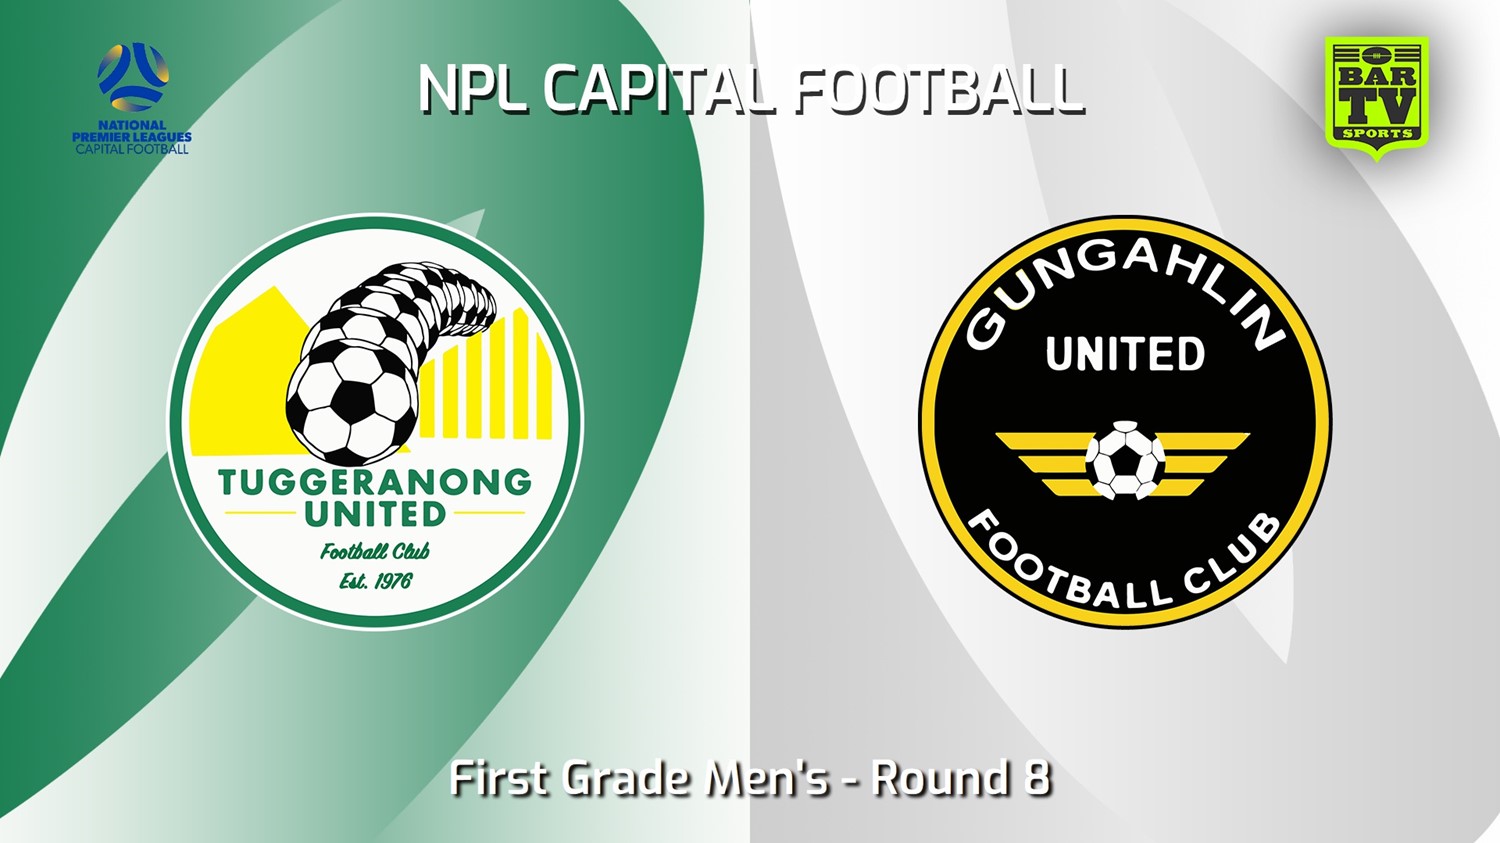 240526-video-Capital NPL Round 8 - Tuggeranong United v Gungahlin United Minigame Slate Image